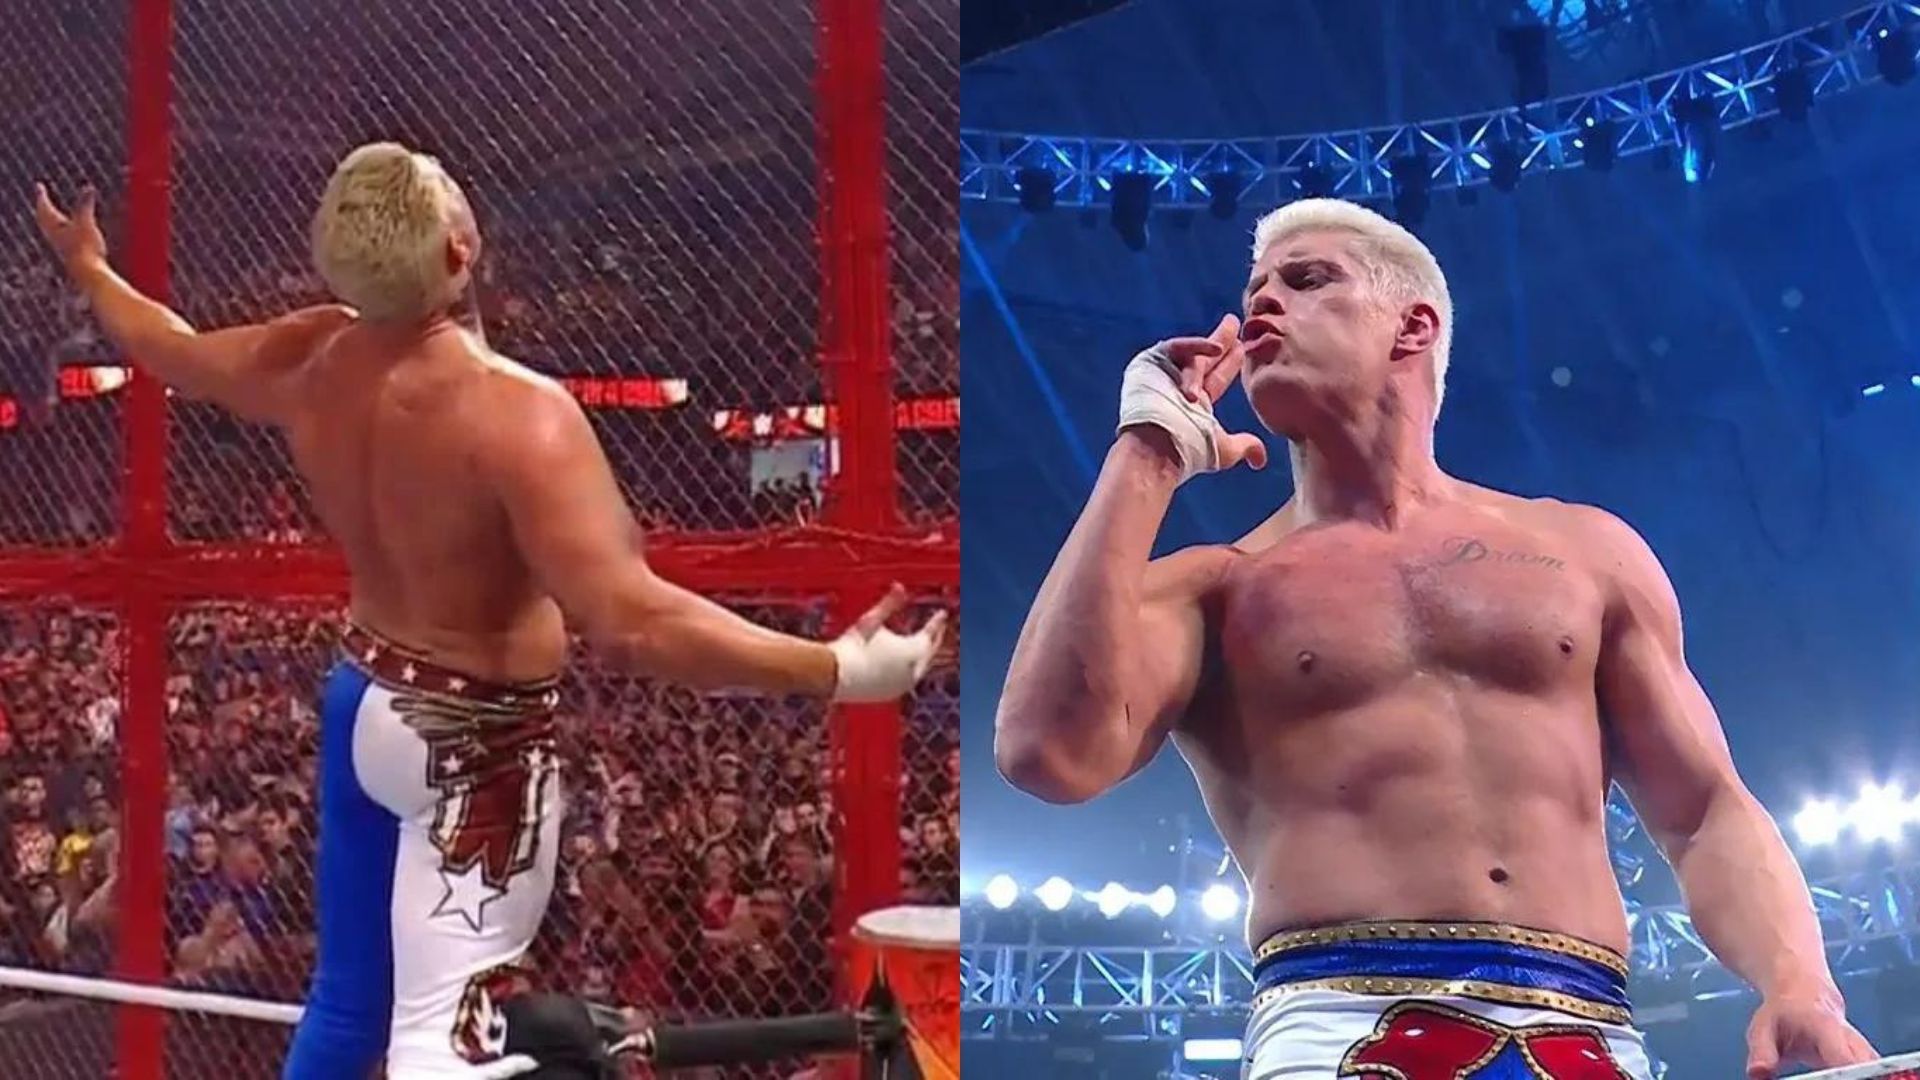 Cody Rhodes is set to headline WrestleMania 39